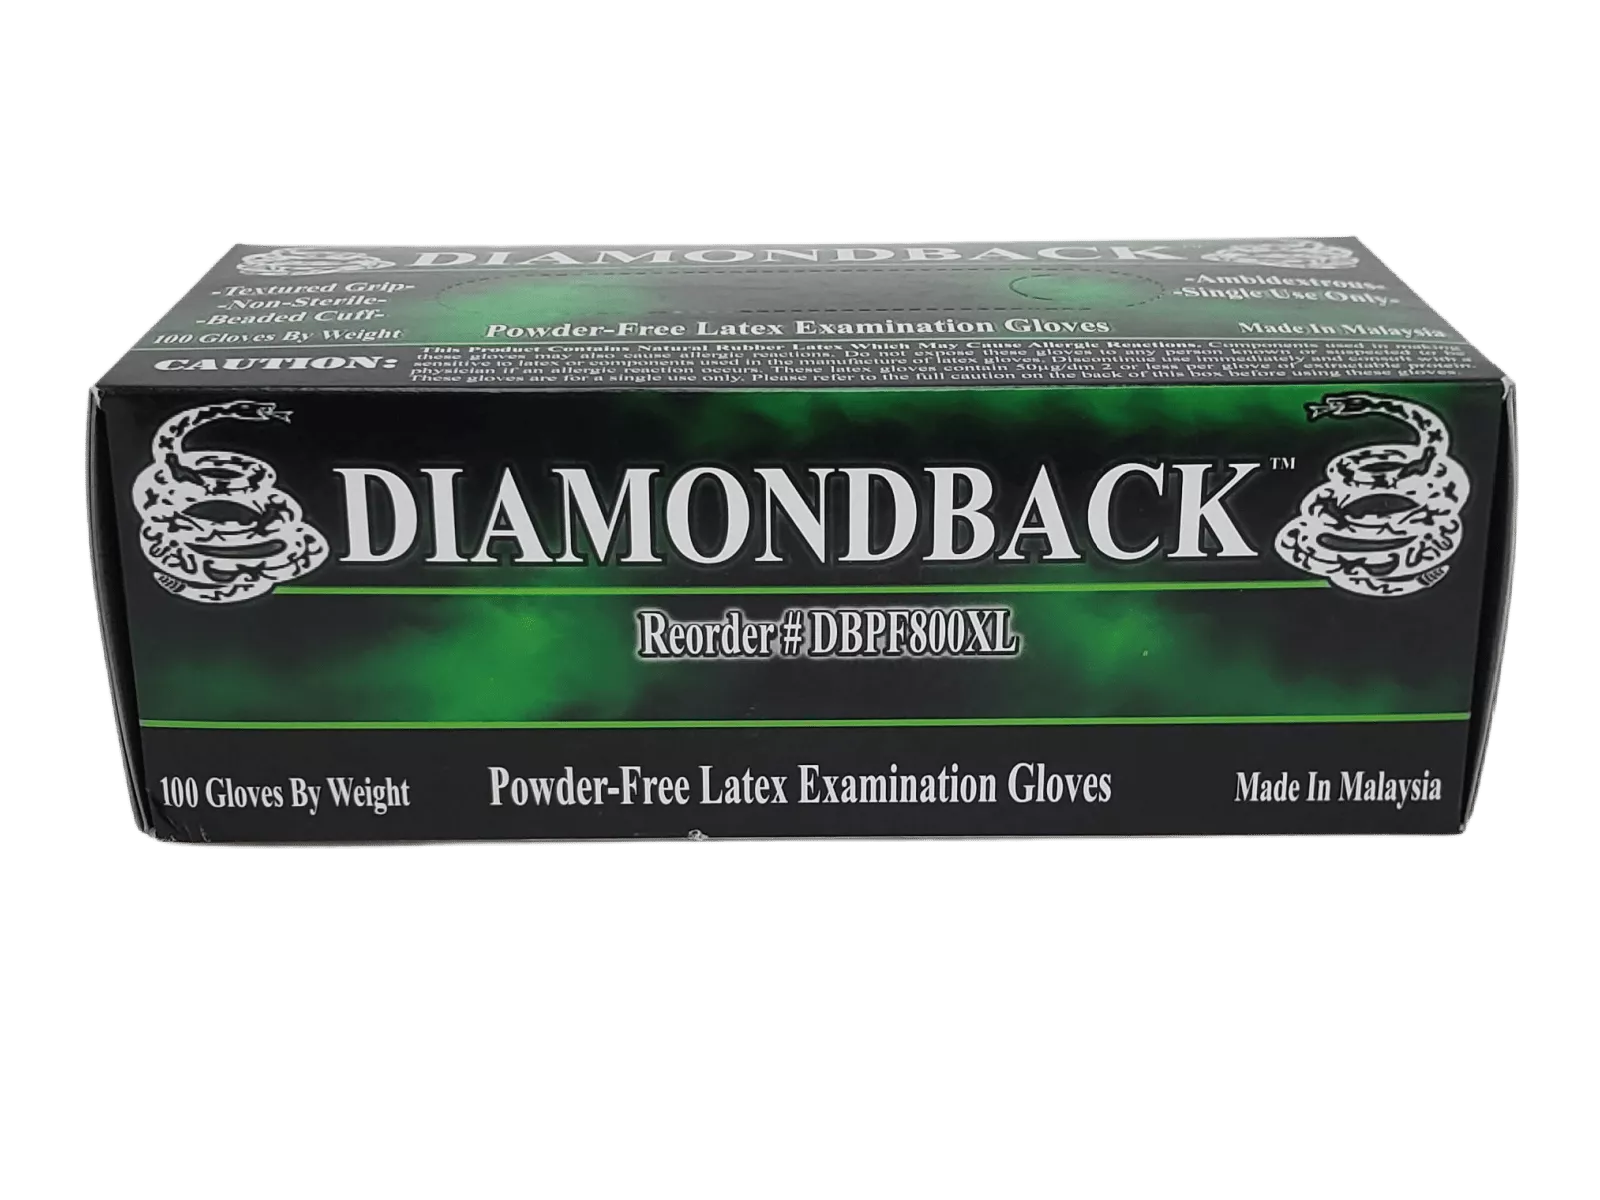 Green and Black Box of Diamondback Latex Examination Gloves